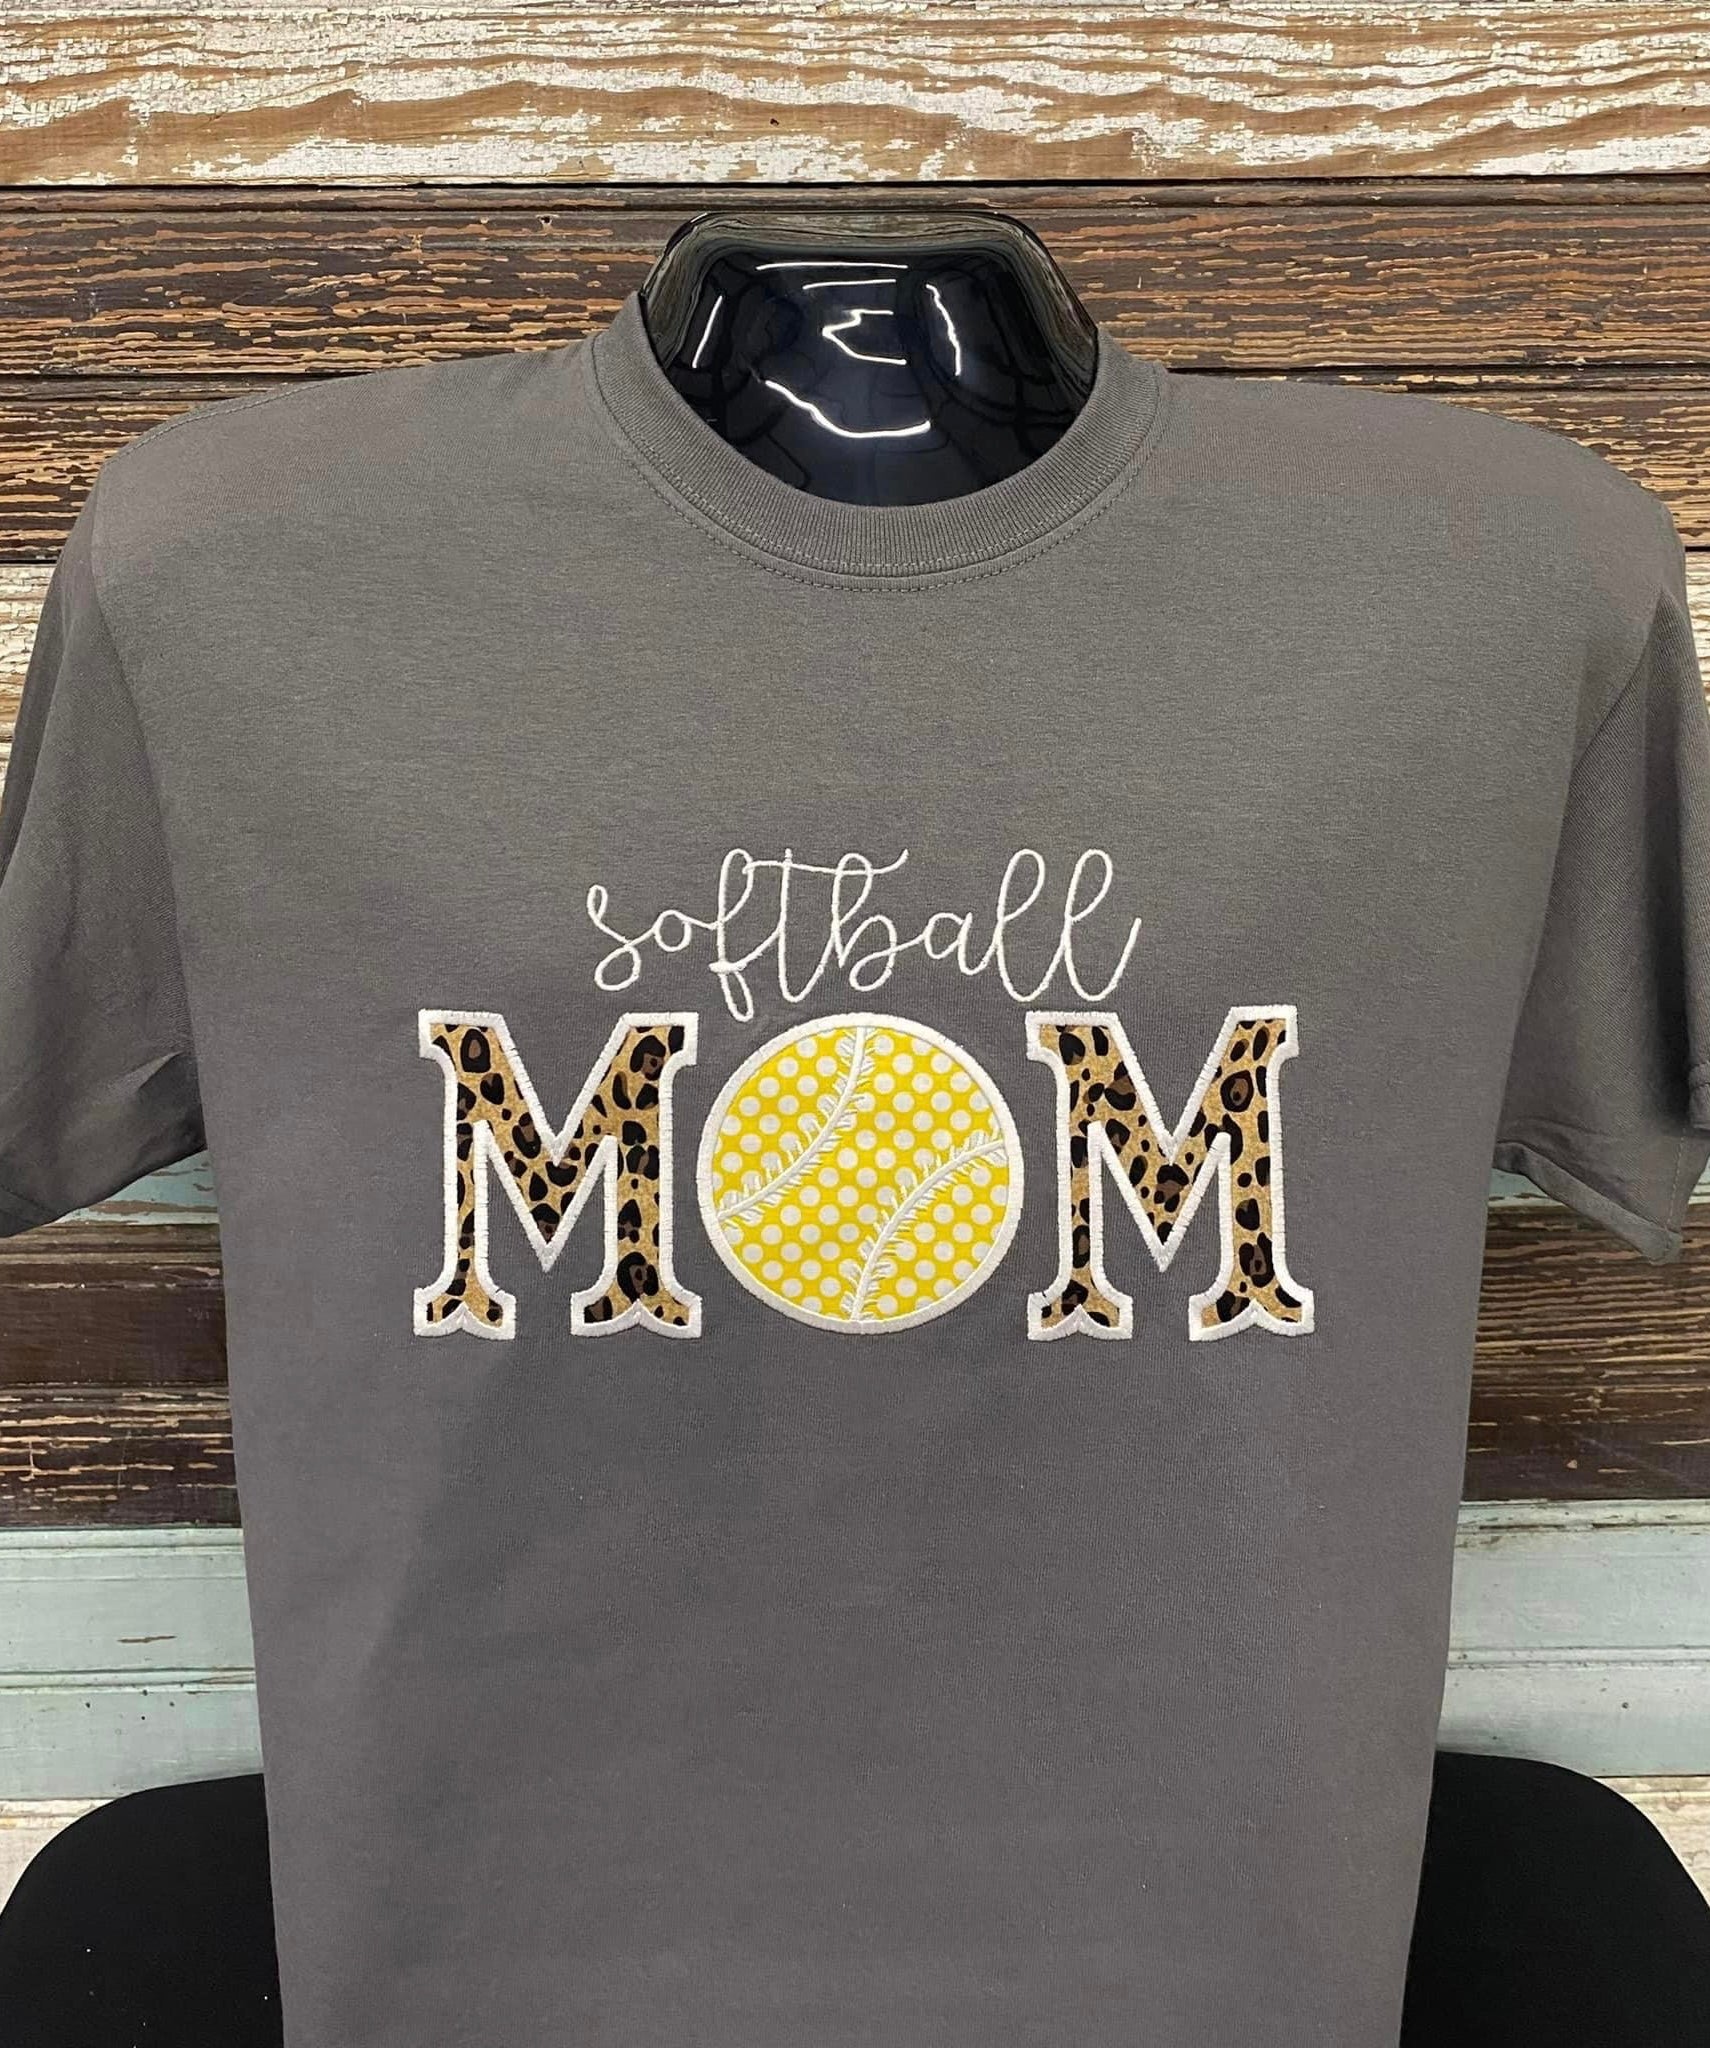 Softball Mom Short Sleeve Shirt